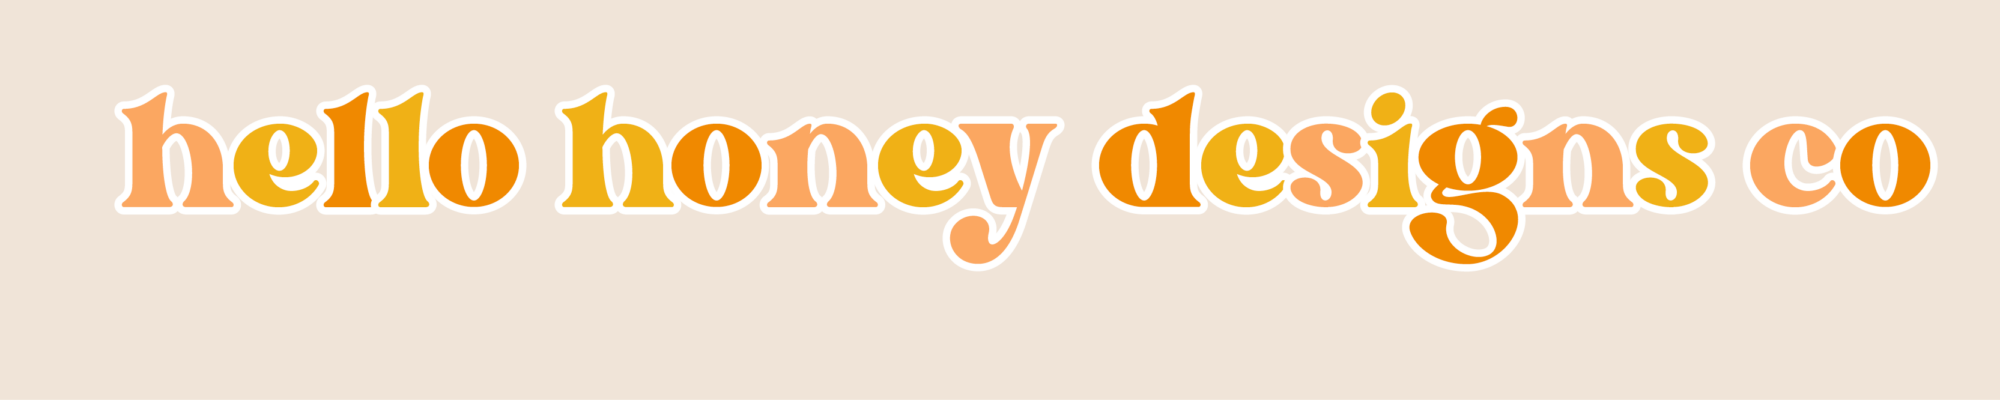 cropped hello honey designs co banner etsy - Pelavida - Shop For Life